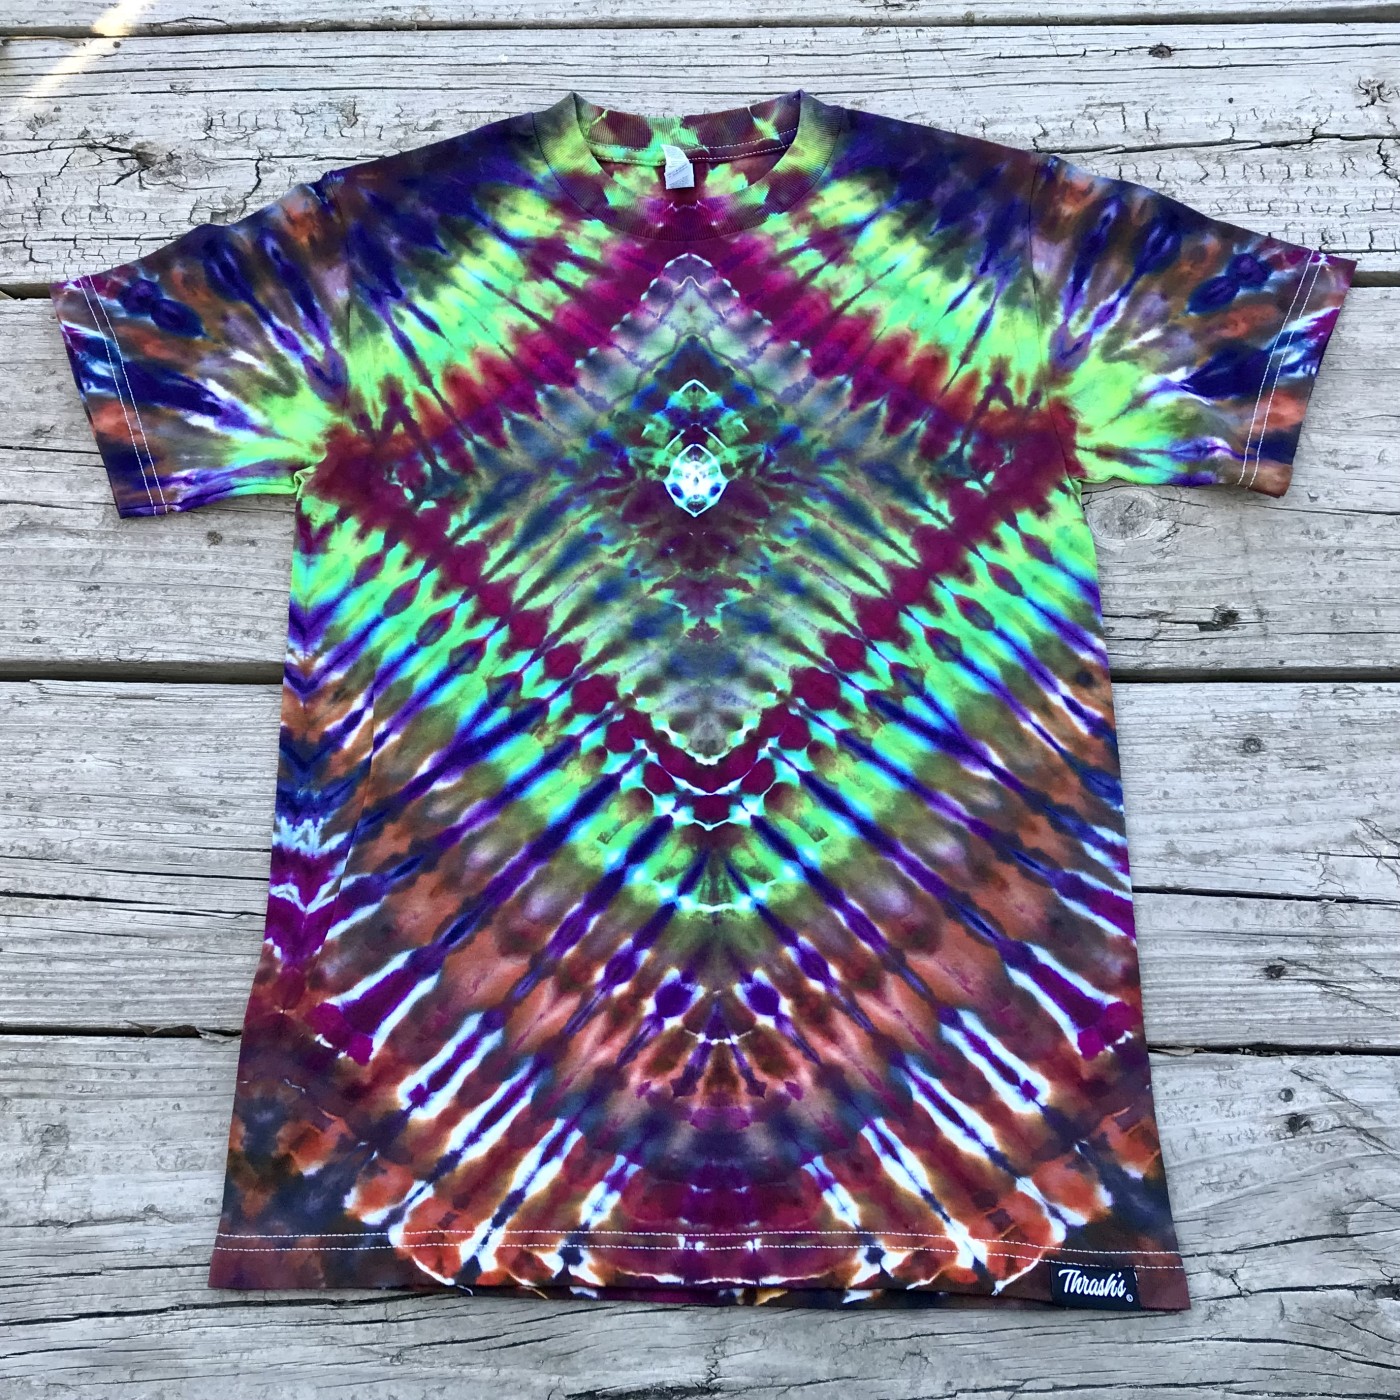 Small size diamond burst Tie Dye T-shirt by Matt Thrash